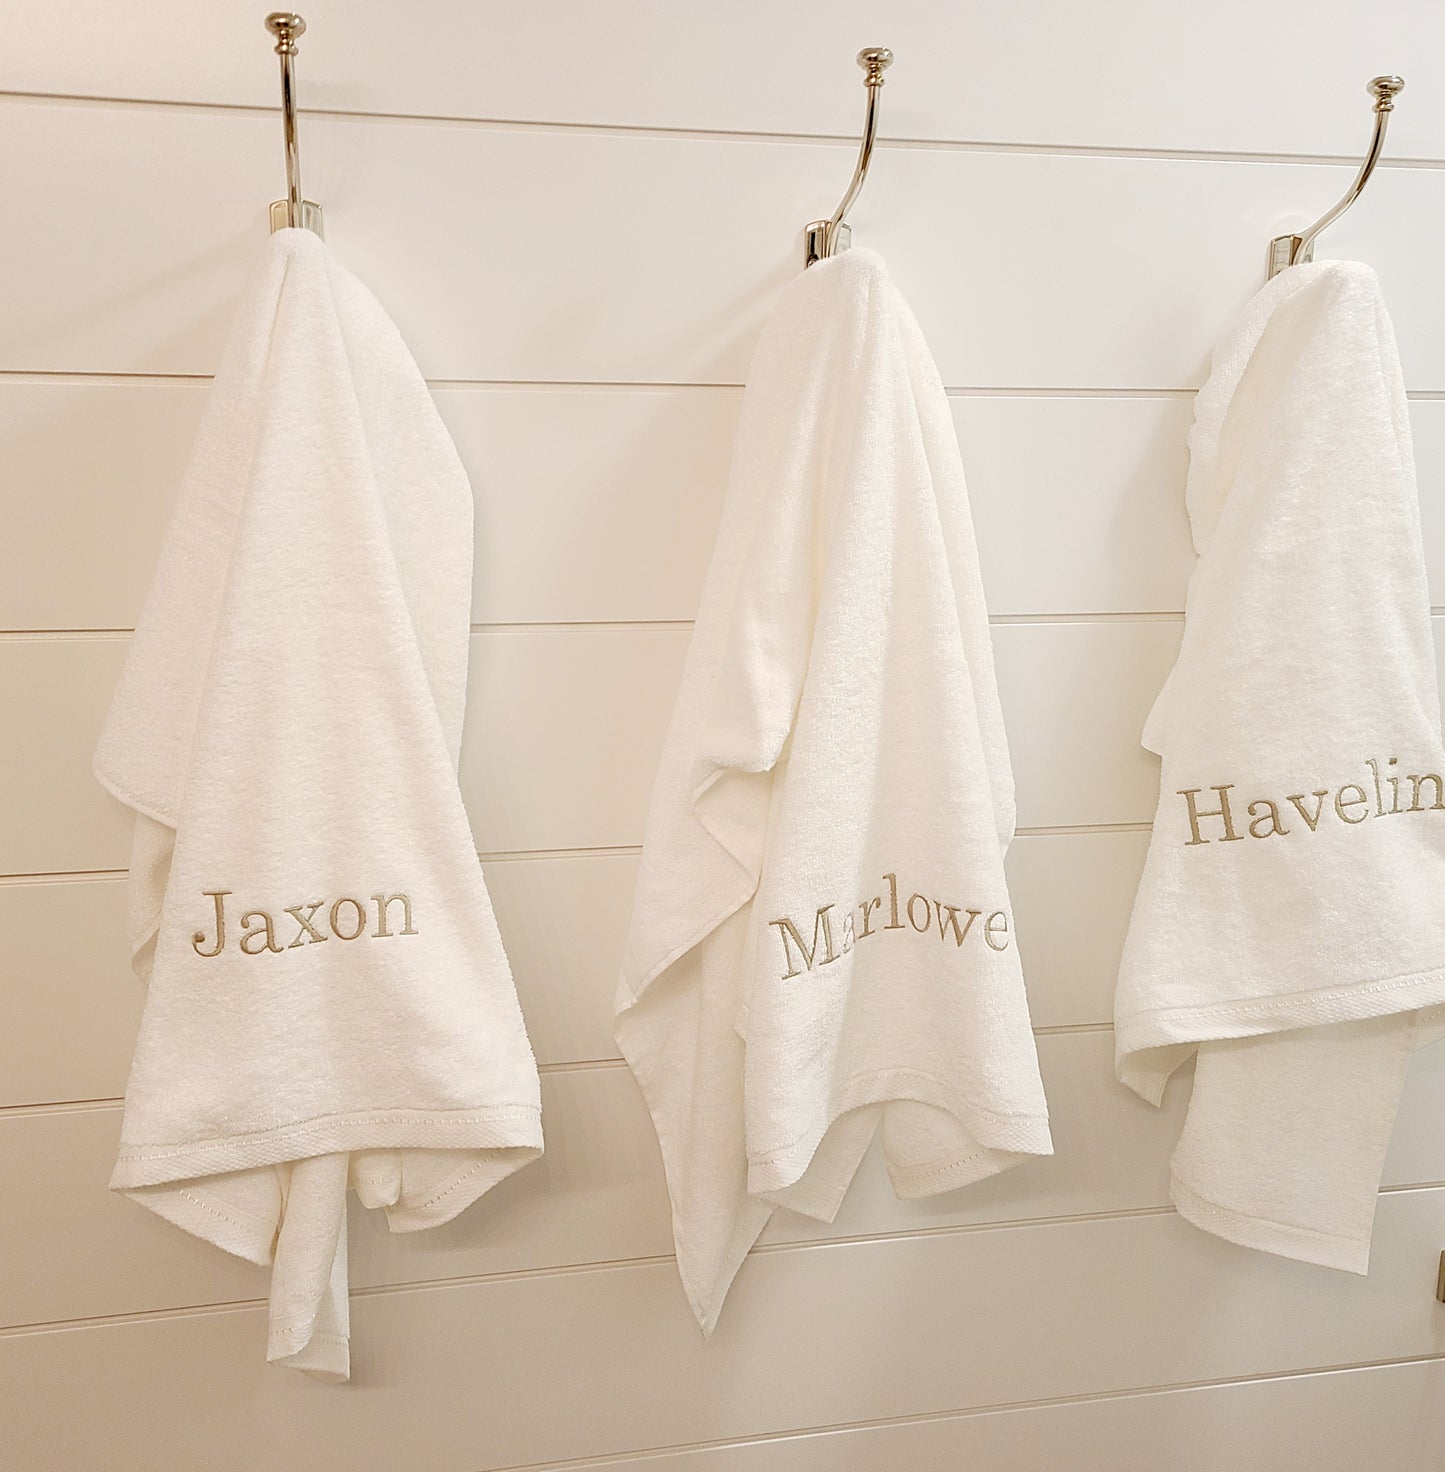 Name Bath Towel